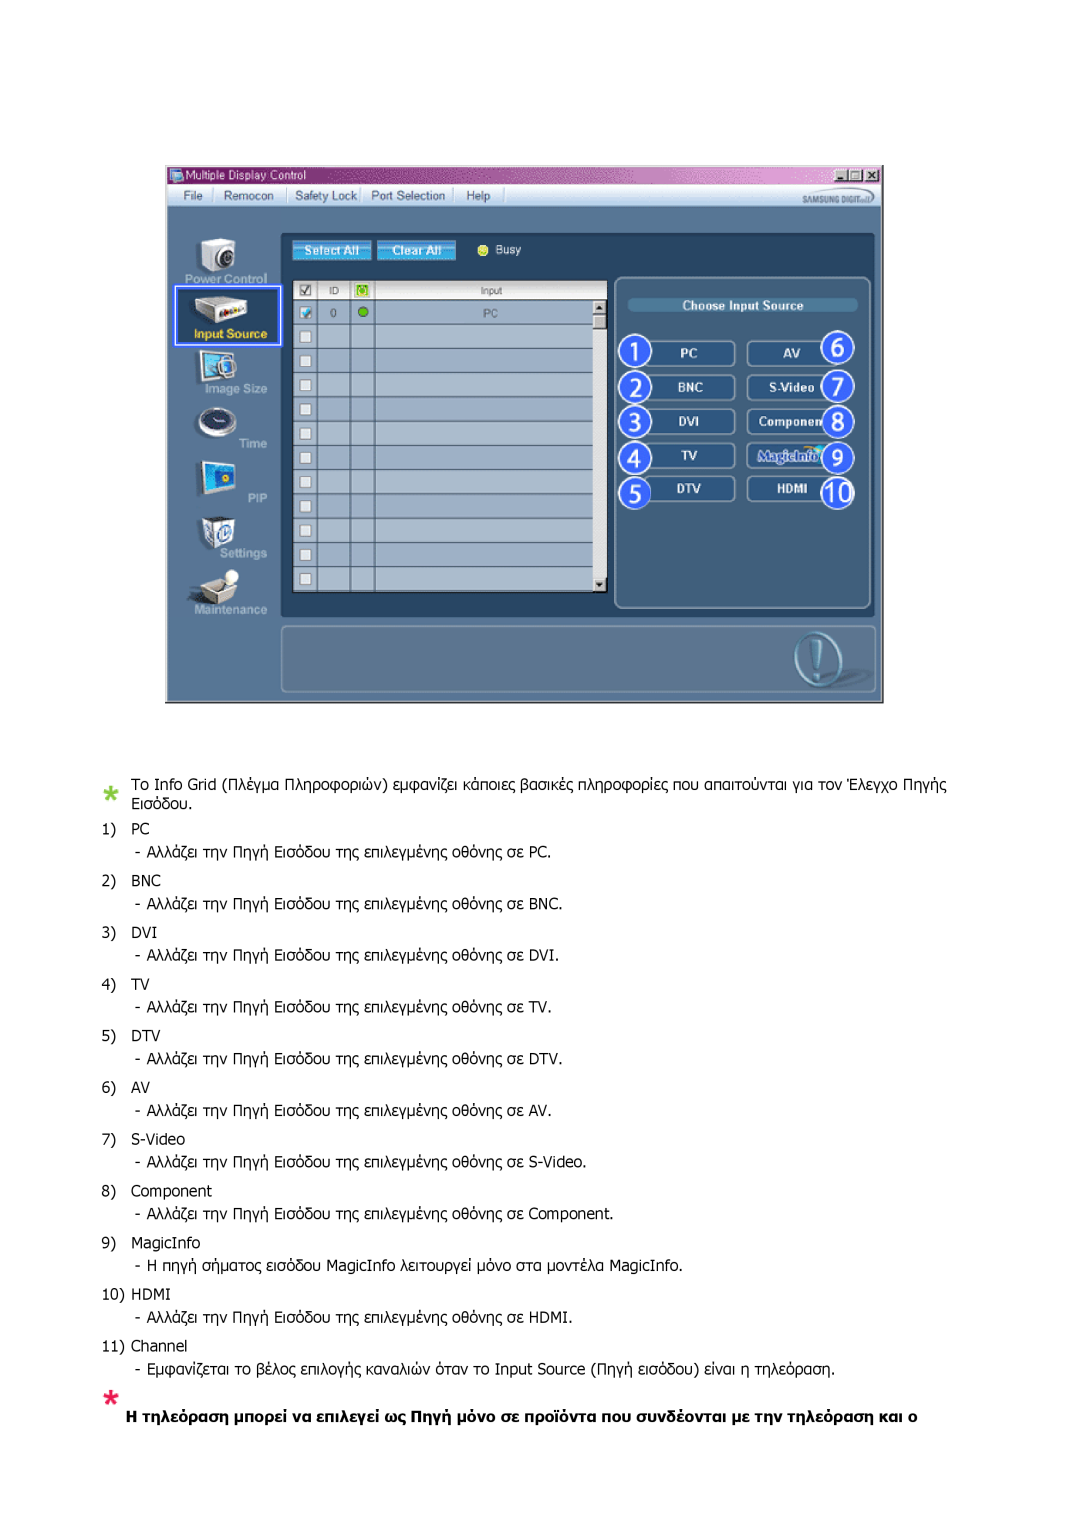 Samsung LH46MSTLBB/EN, LH46MRPLBF/EN, LH40MRTLBC/EN manual 1 PC Αλλάζει την Πηγή Εισόδου της επιλεγμένης οθόνης σε PC 2 BNC 